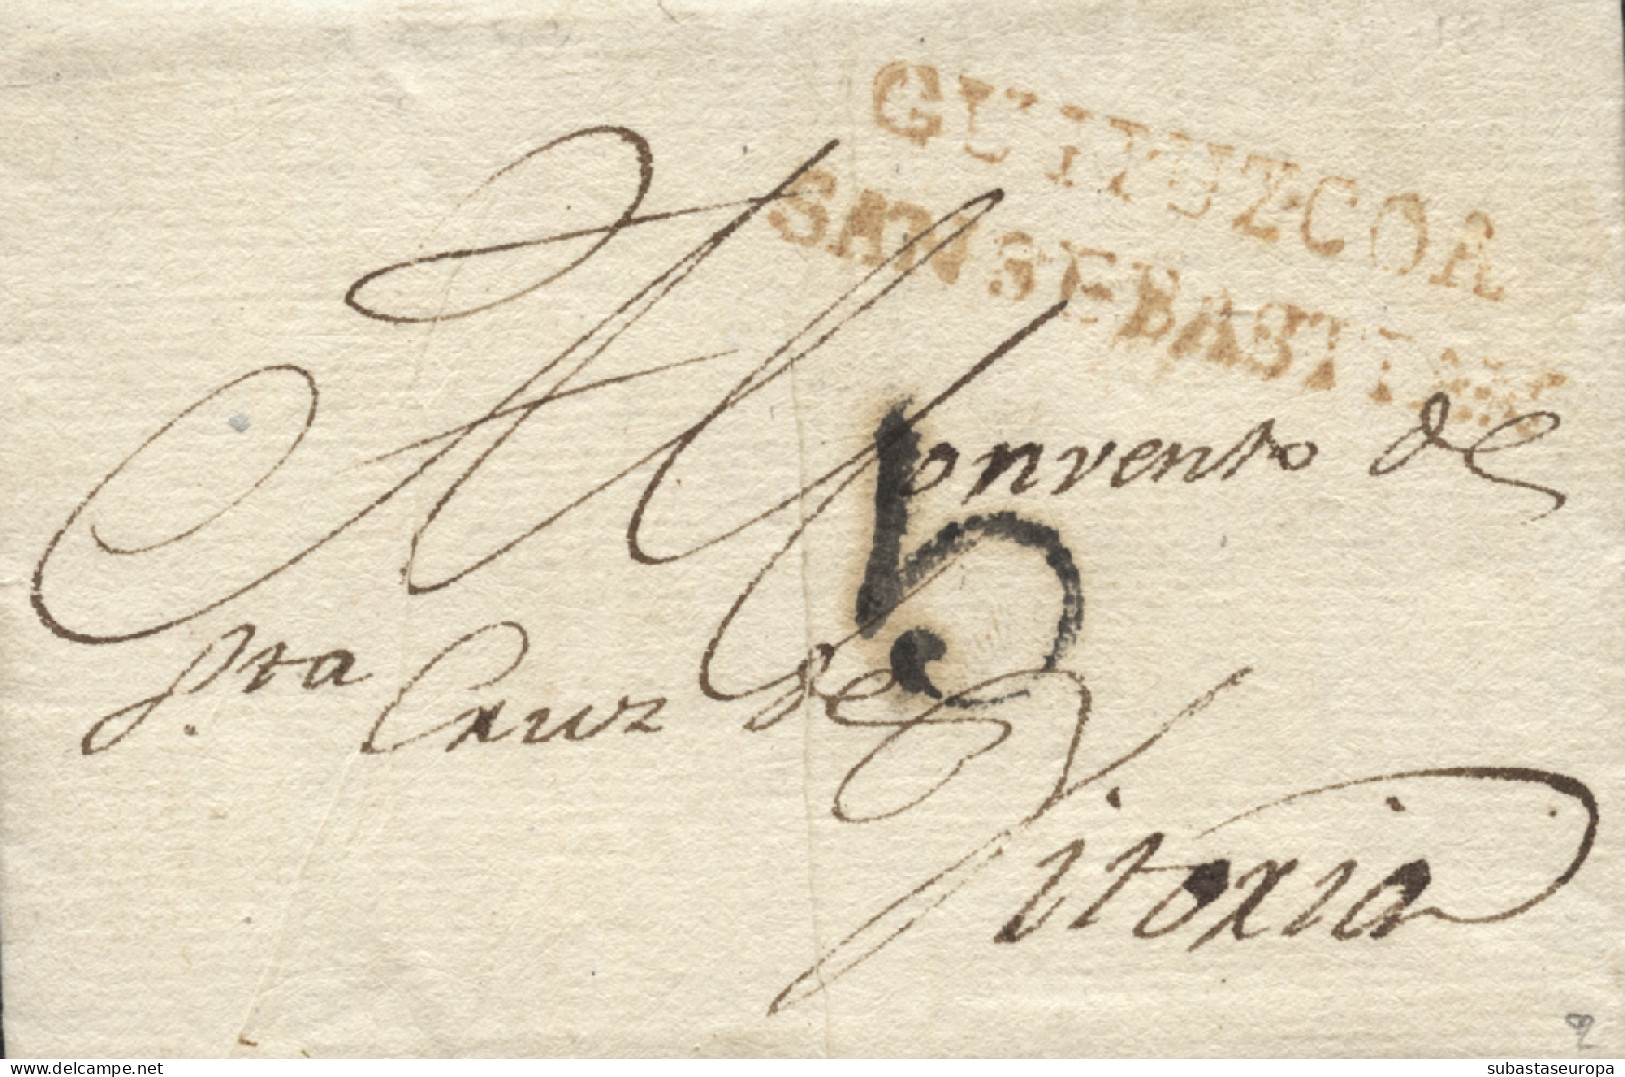 D.P. 11. 1812 (8 JUN). Carta De San Sebastián A Vitoria. Marca Nº 20R. Porteo 5 Mms. Preciosa. - ...-1850 Vorphilatelie